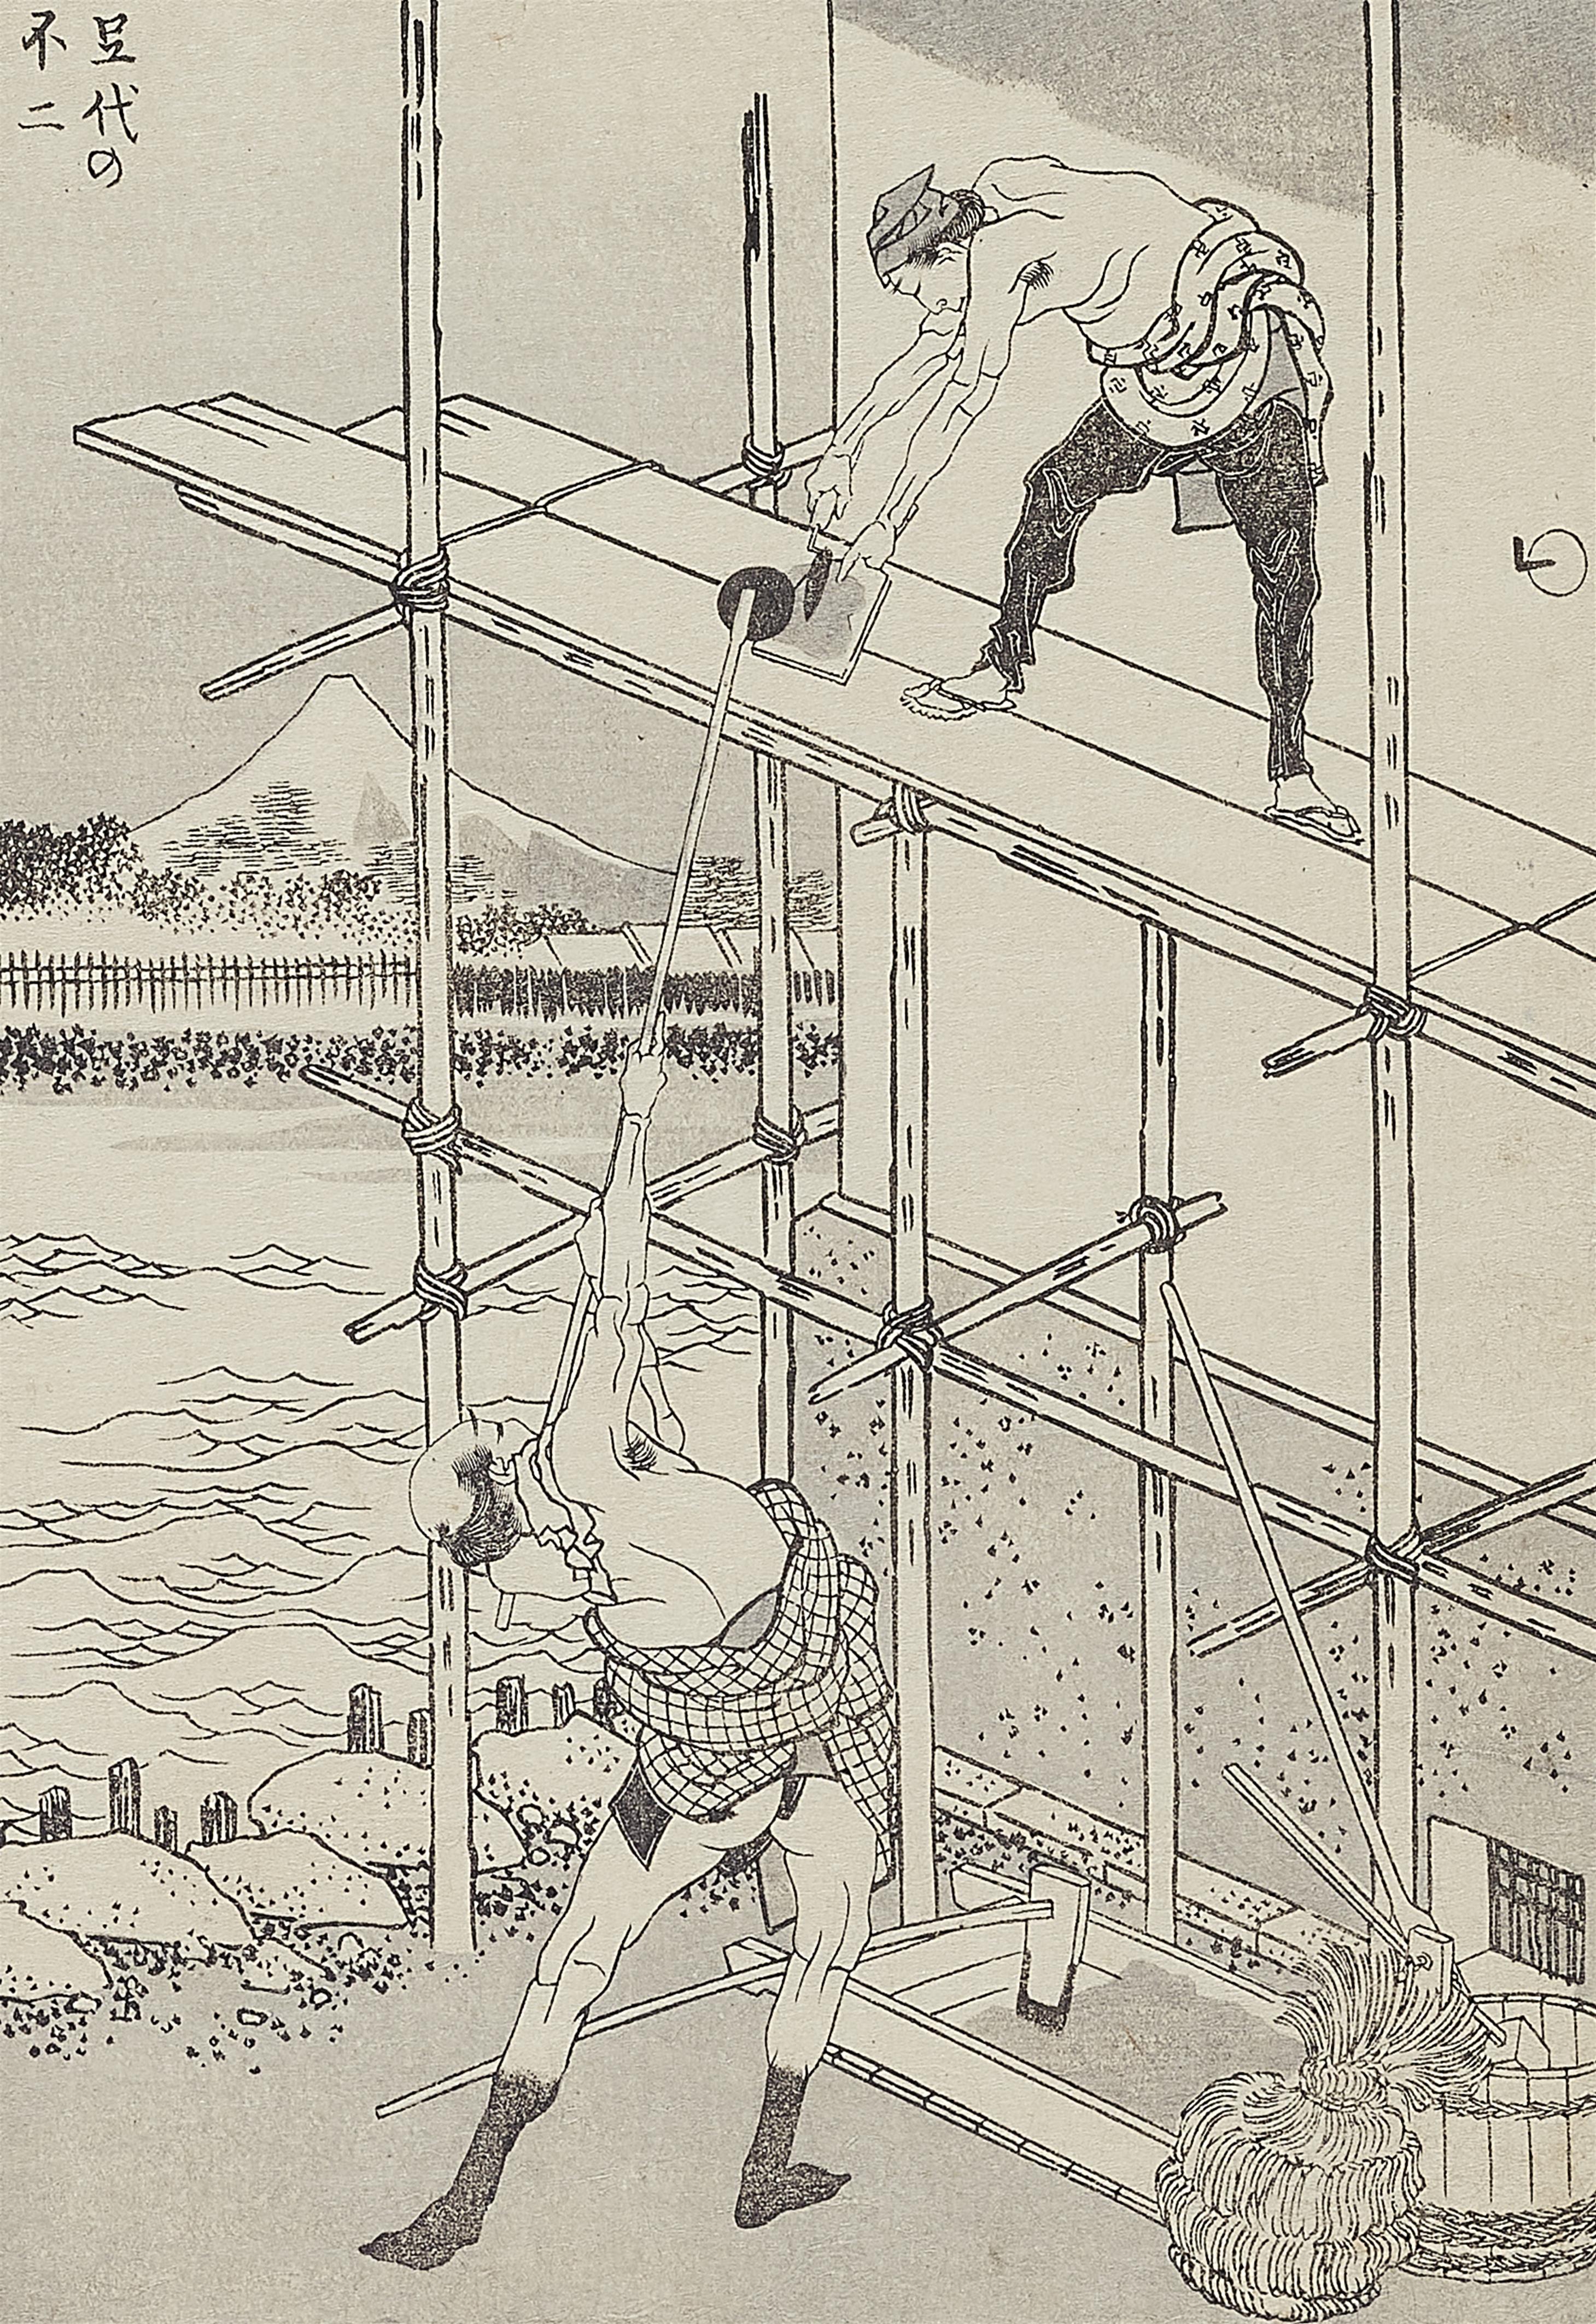 Katsushika Hokusai - Black and white illustrations from the album Fugaku hyakkei - image-35